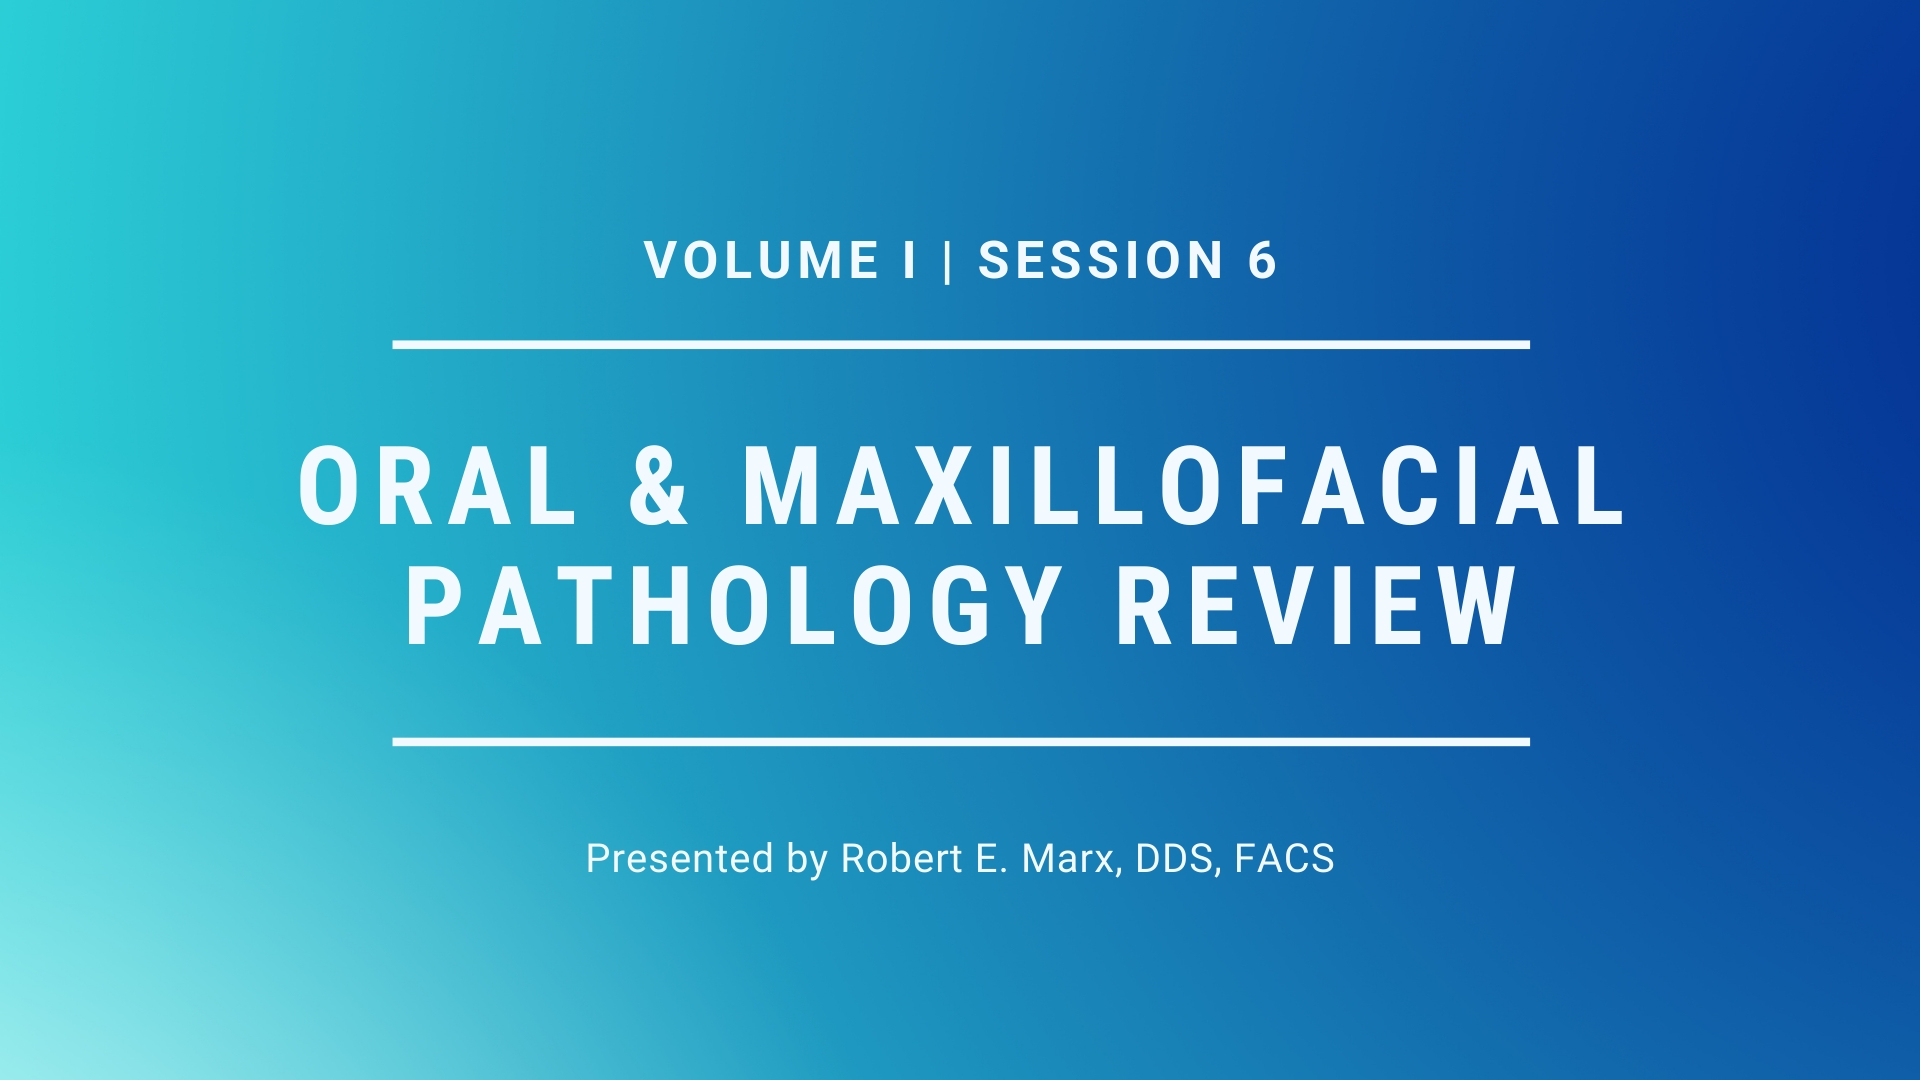 Oral & Maxillofacial Pathology Review – Volume I (OMFS) - Session 6